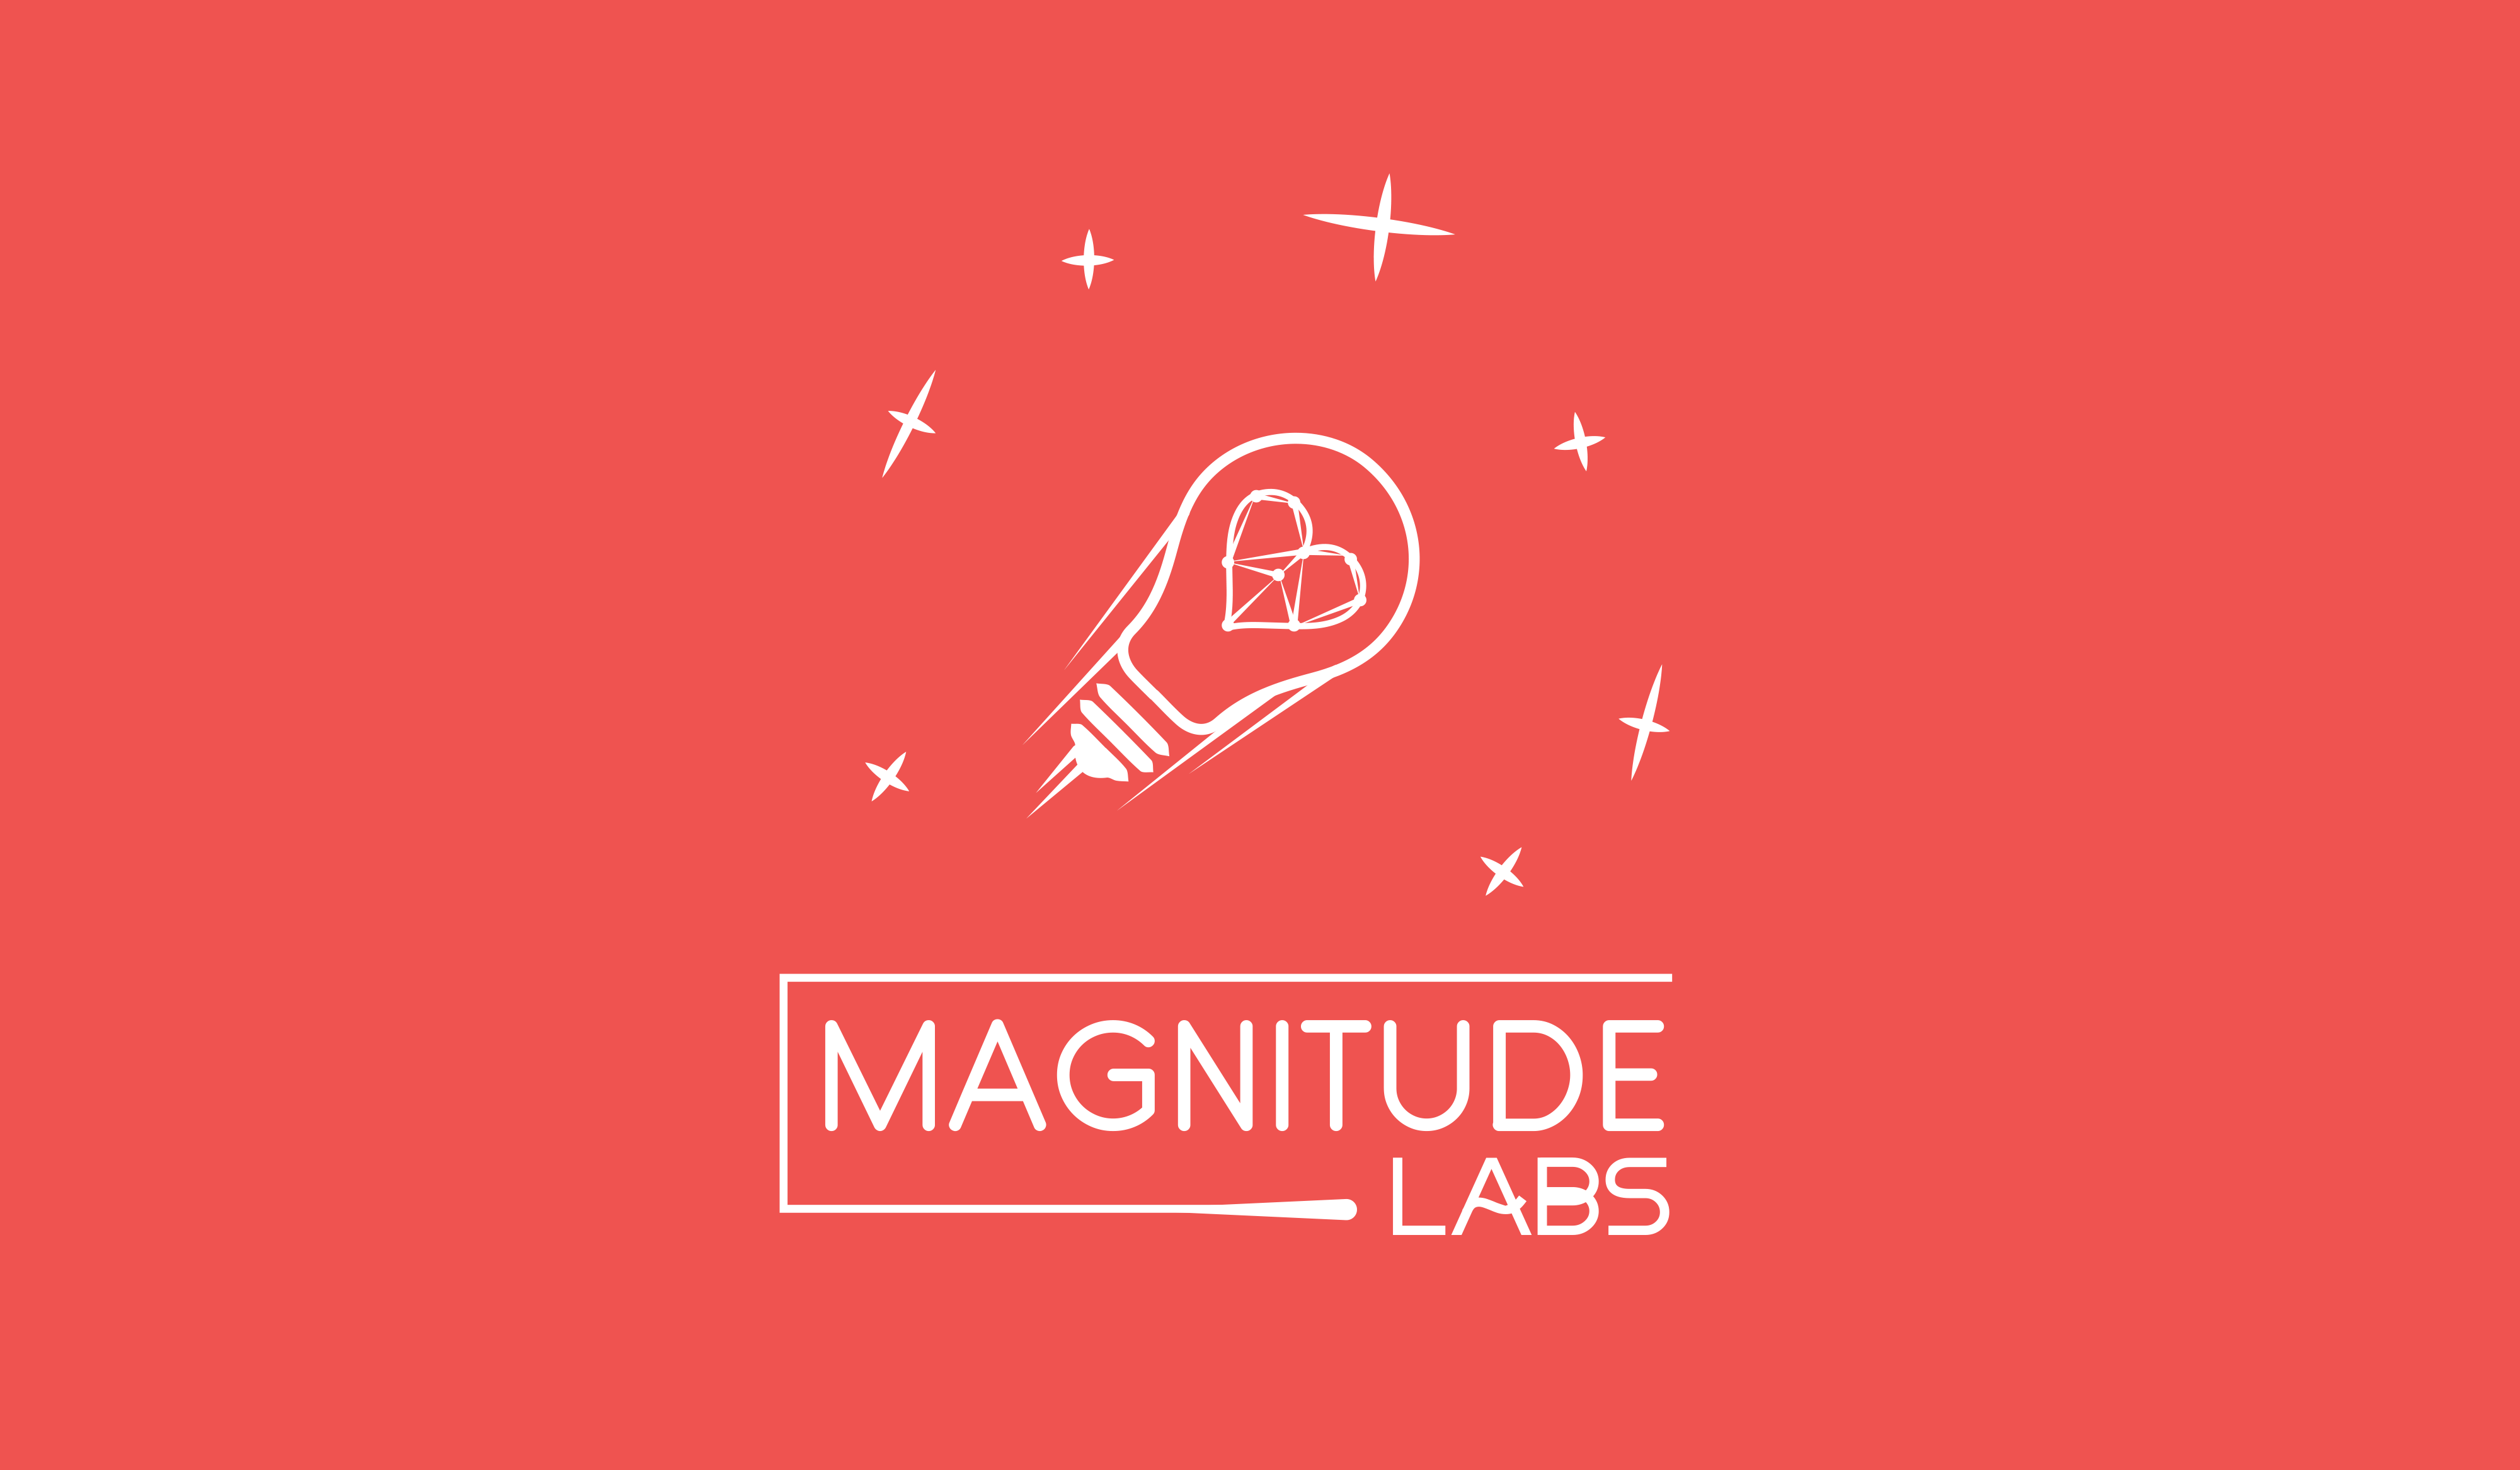 Magnitude Labs